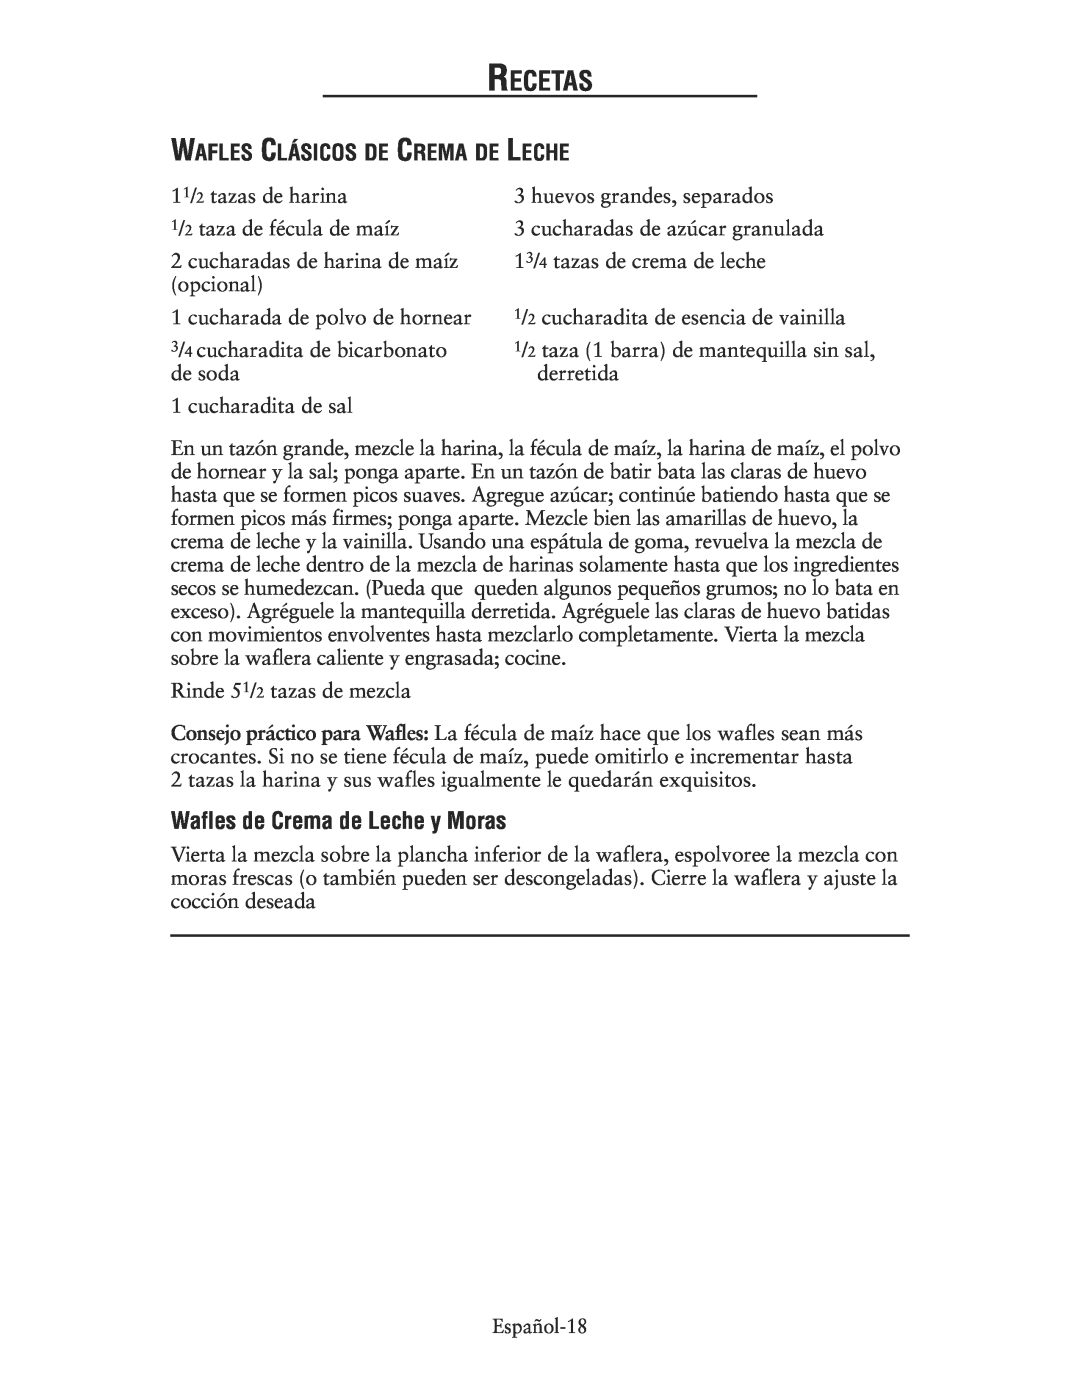 Oster CKSTWFBF10, 135018 user manual Wafles de Crema de Leche y Moras, Wafles Clásicos De Crema De Leche, Recetas 